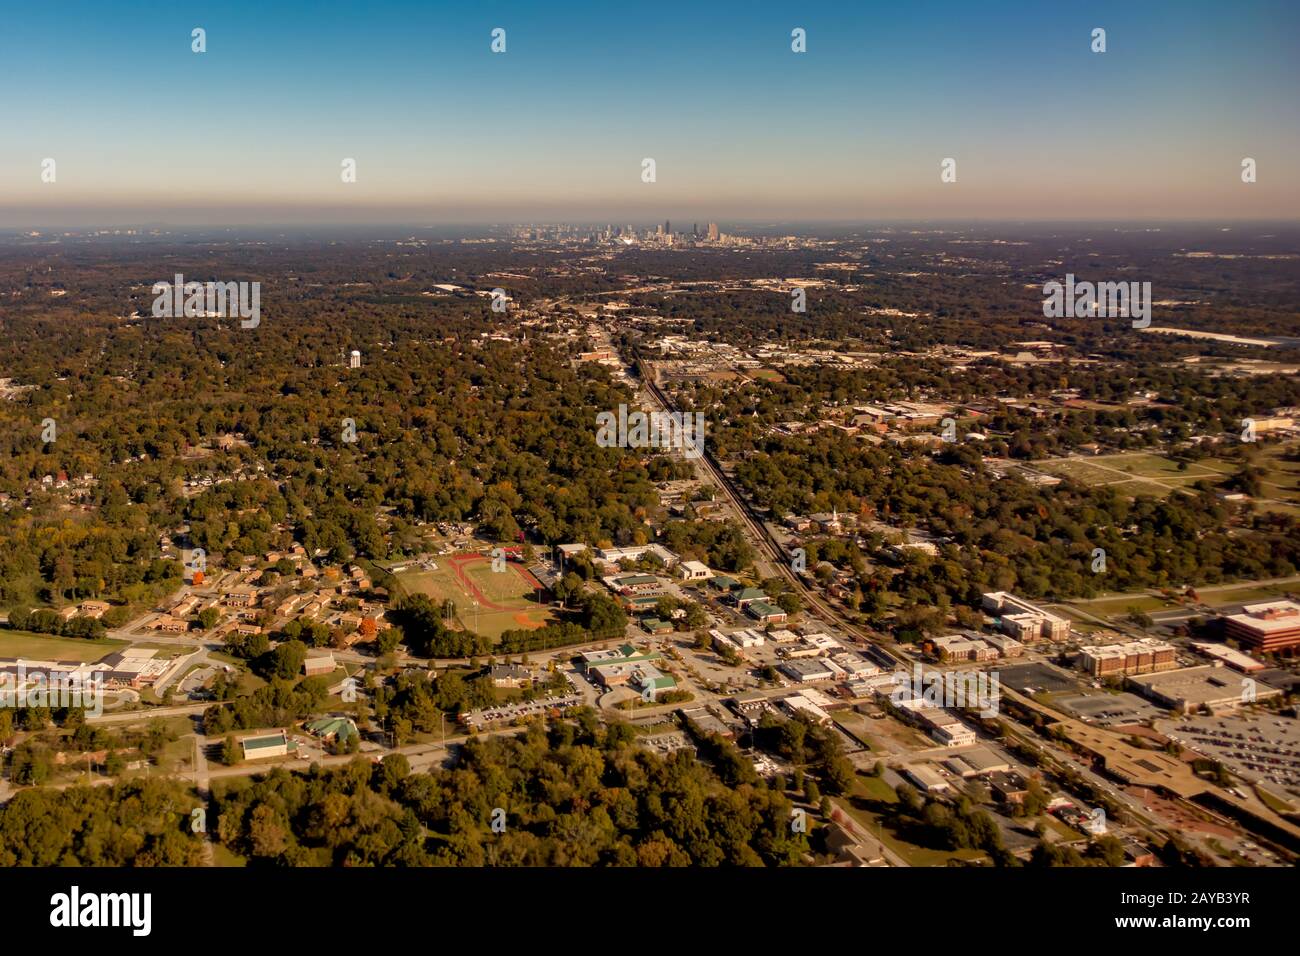 atlanta city skyline and suburbs from ariplane Stock Photo